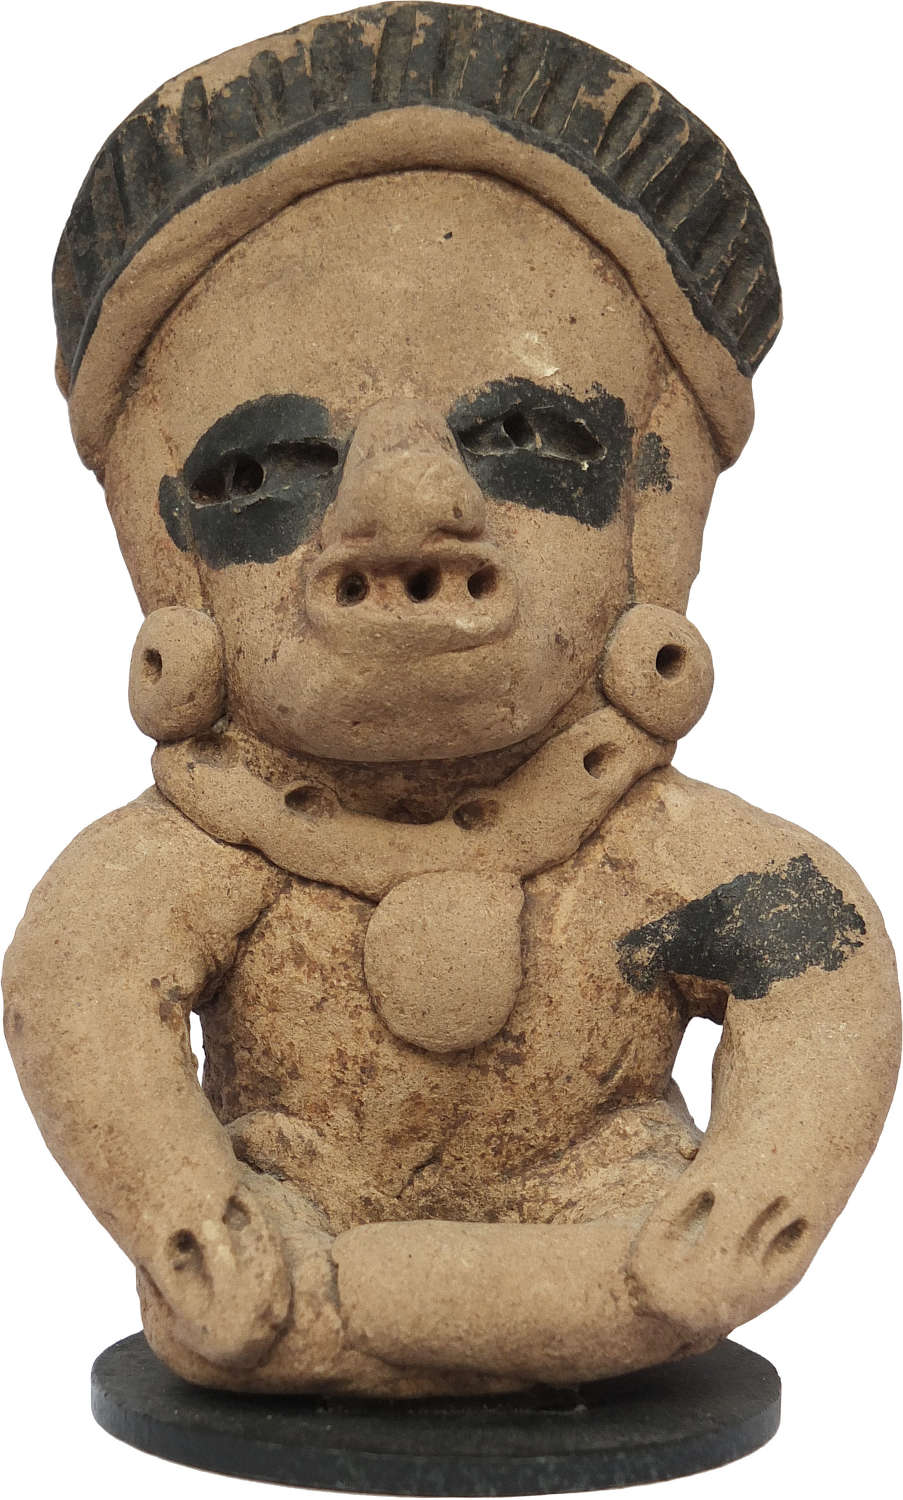 A Mexican Vera Cruz terracotta seated warrior figure, c. 400-600 A.D.